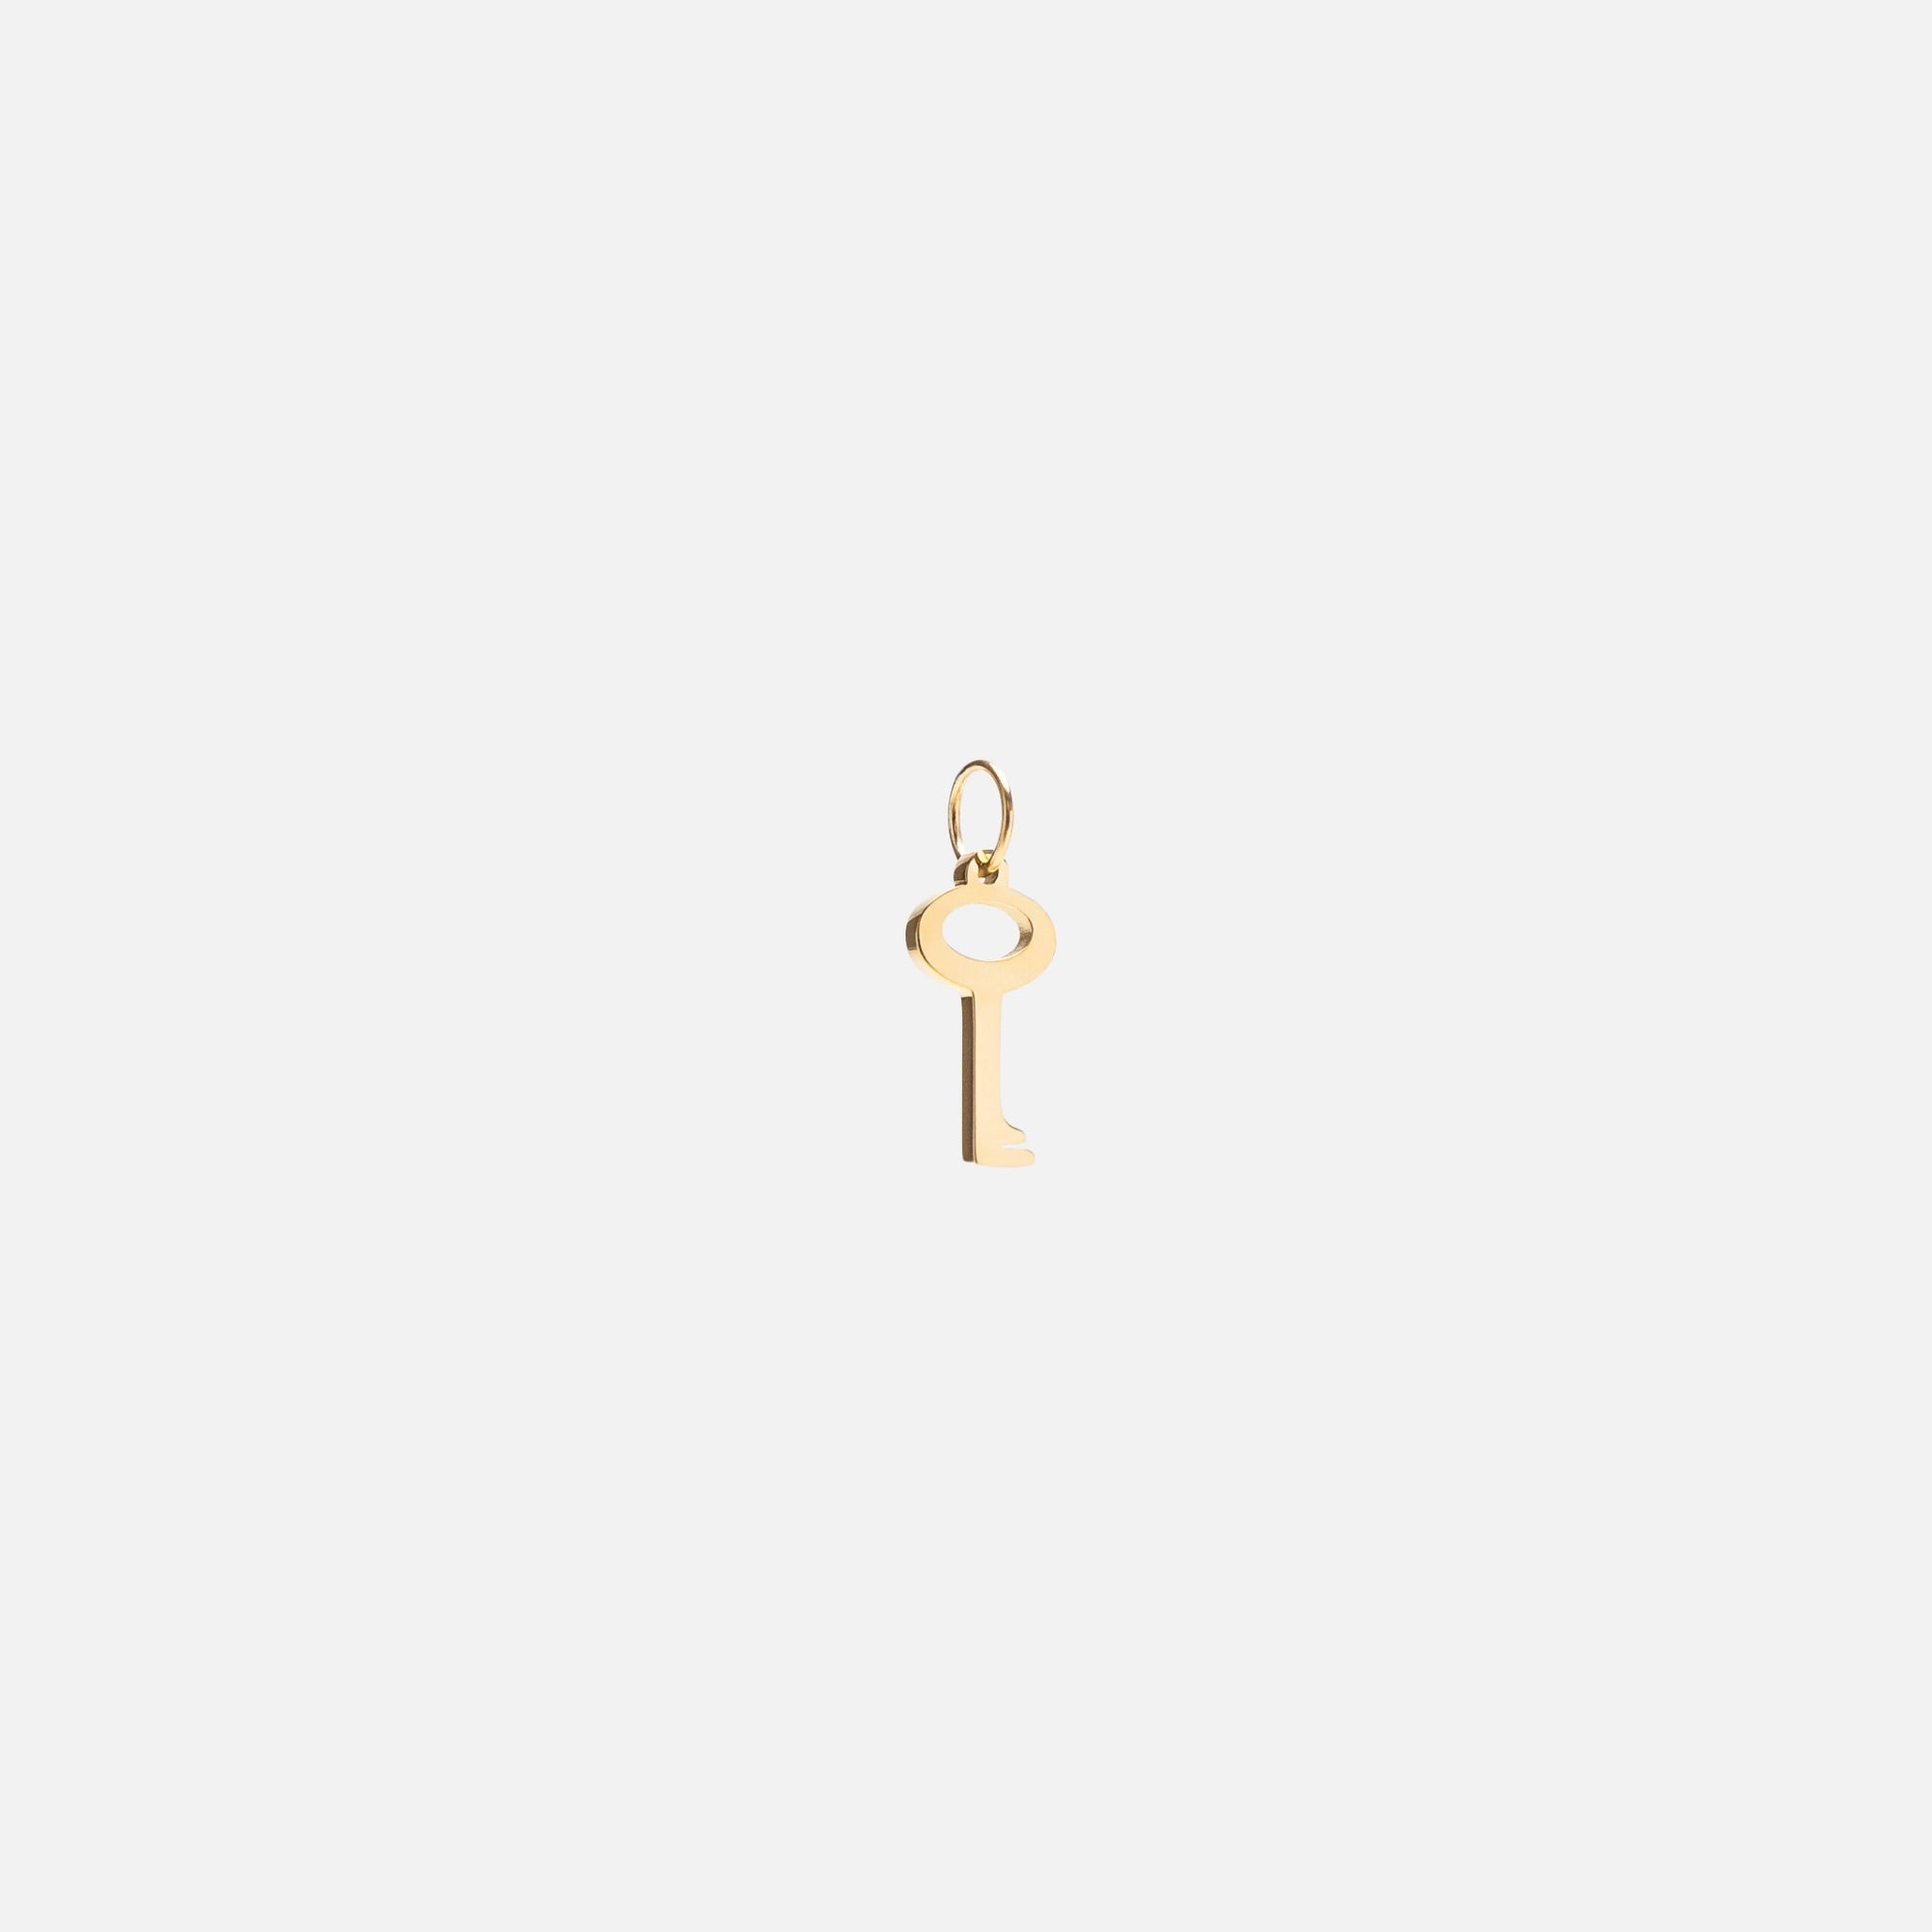 Small golden key charm